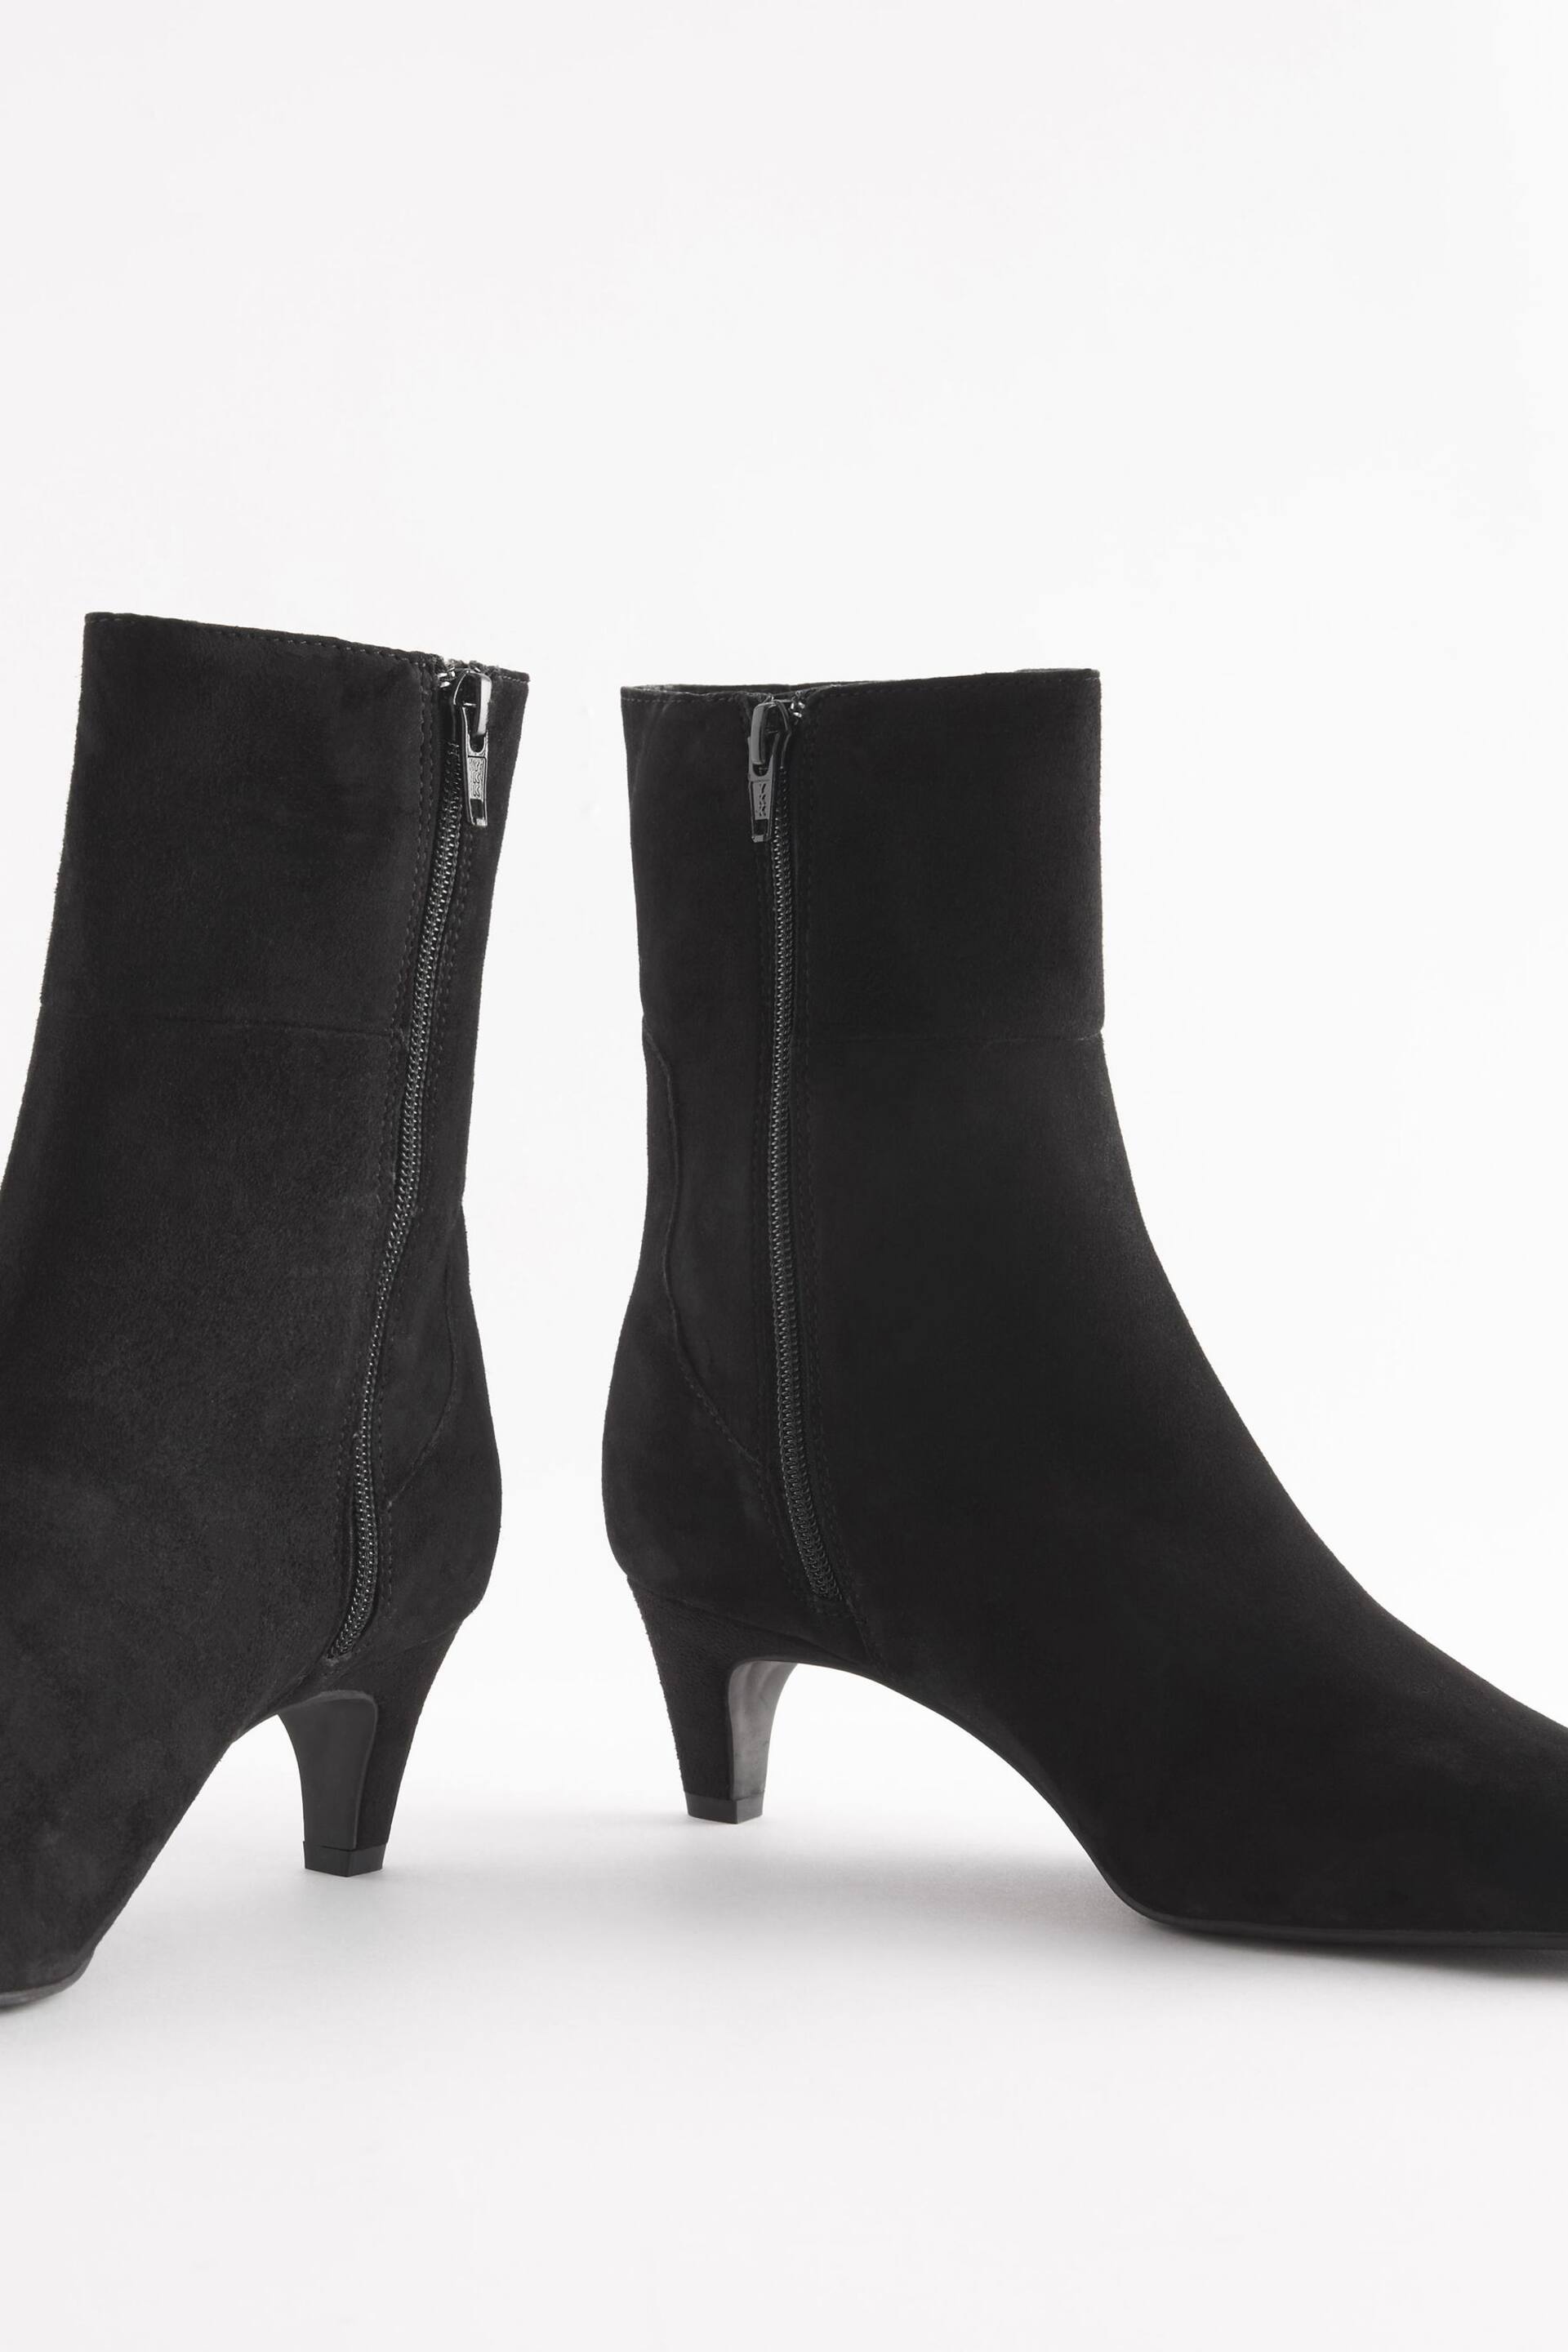 Black Regular/Wide Fit Chisel Toe Chelsea Ankle Boots - Image 7 of 7